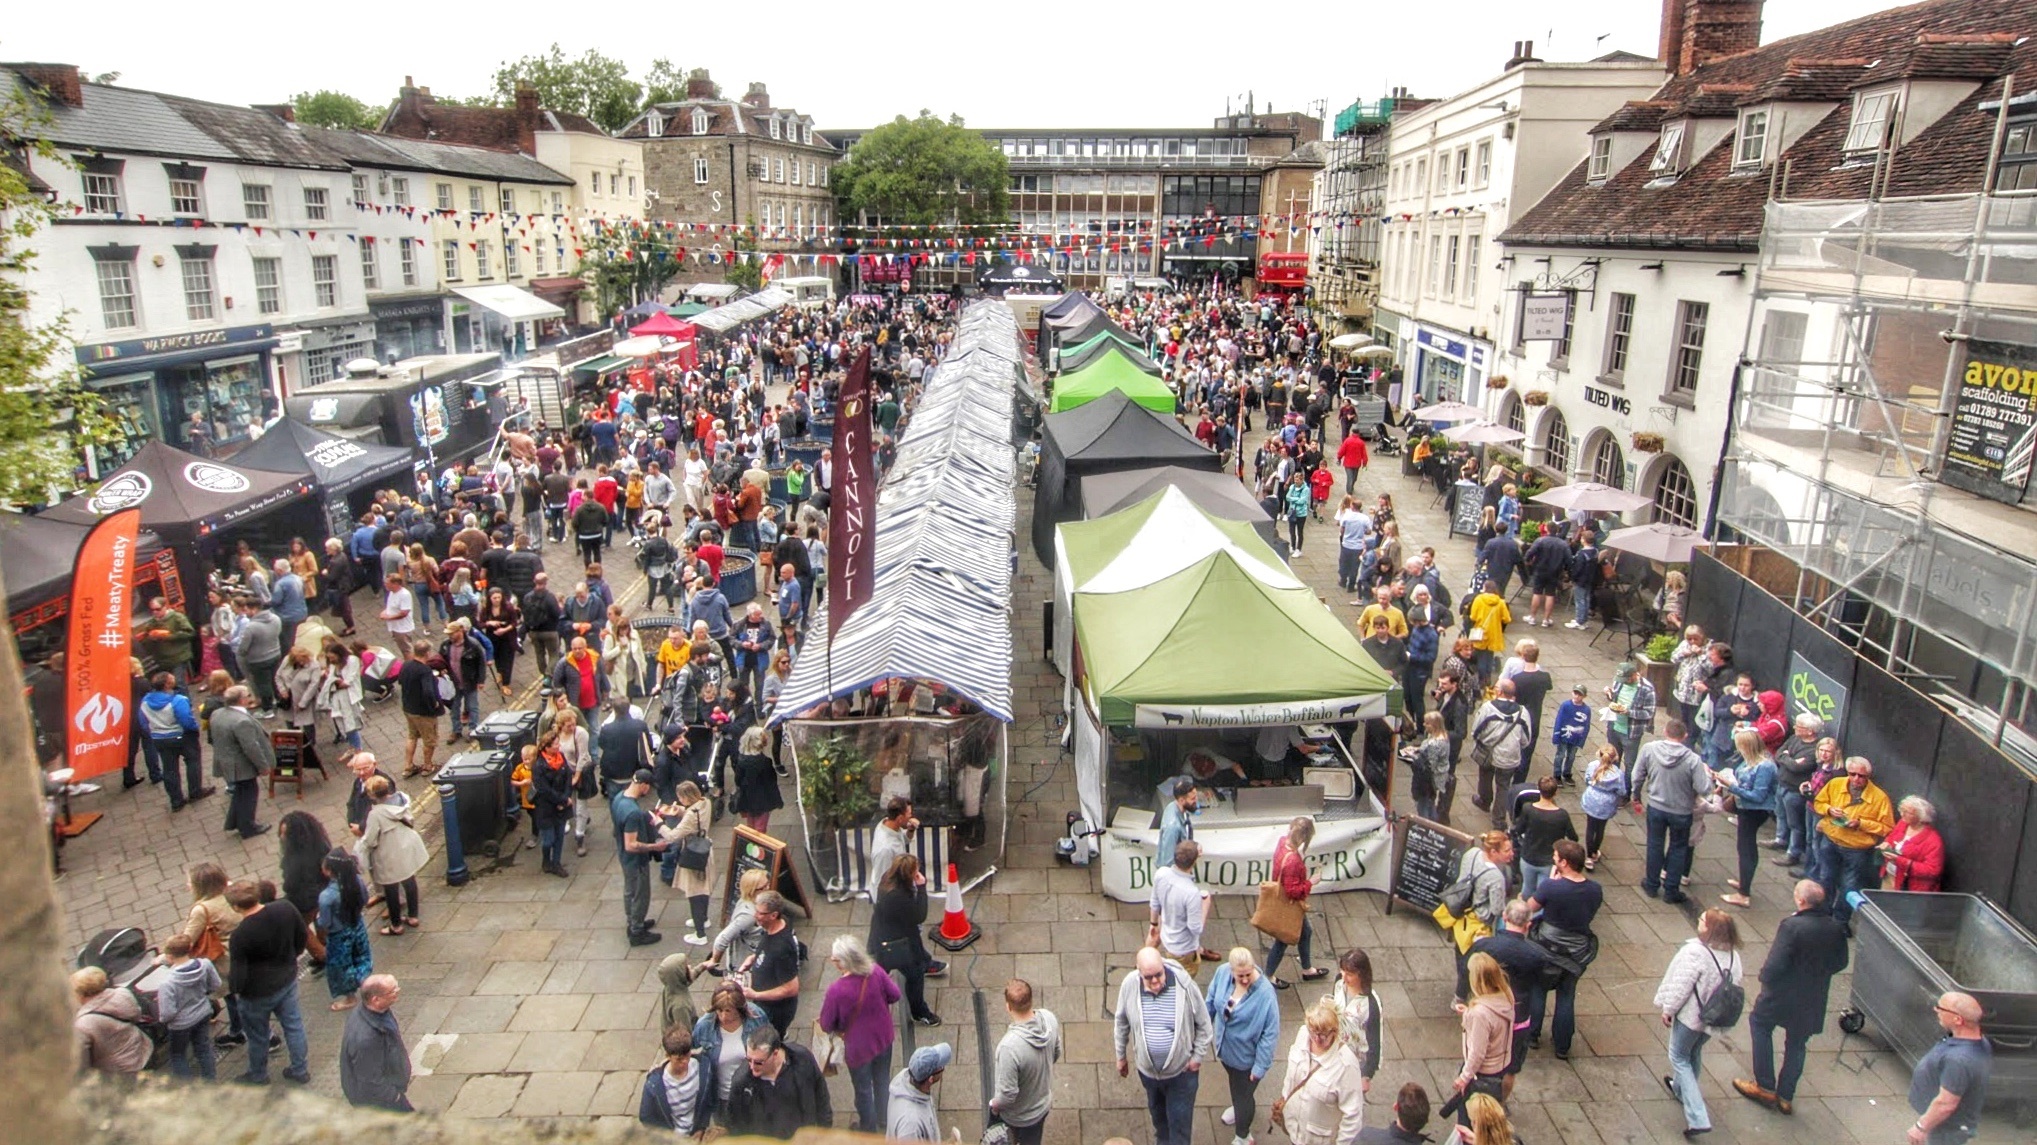 Warwick Food Festival 2020 SponsorMyEvent